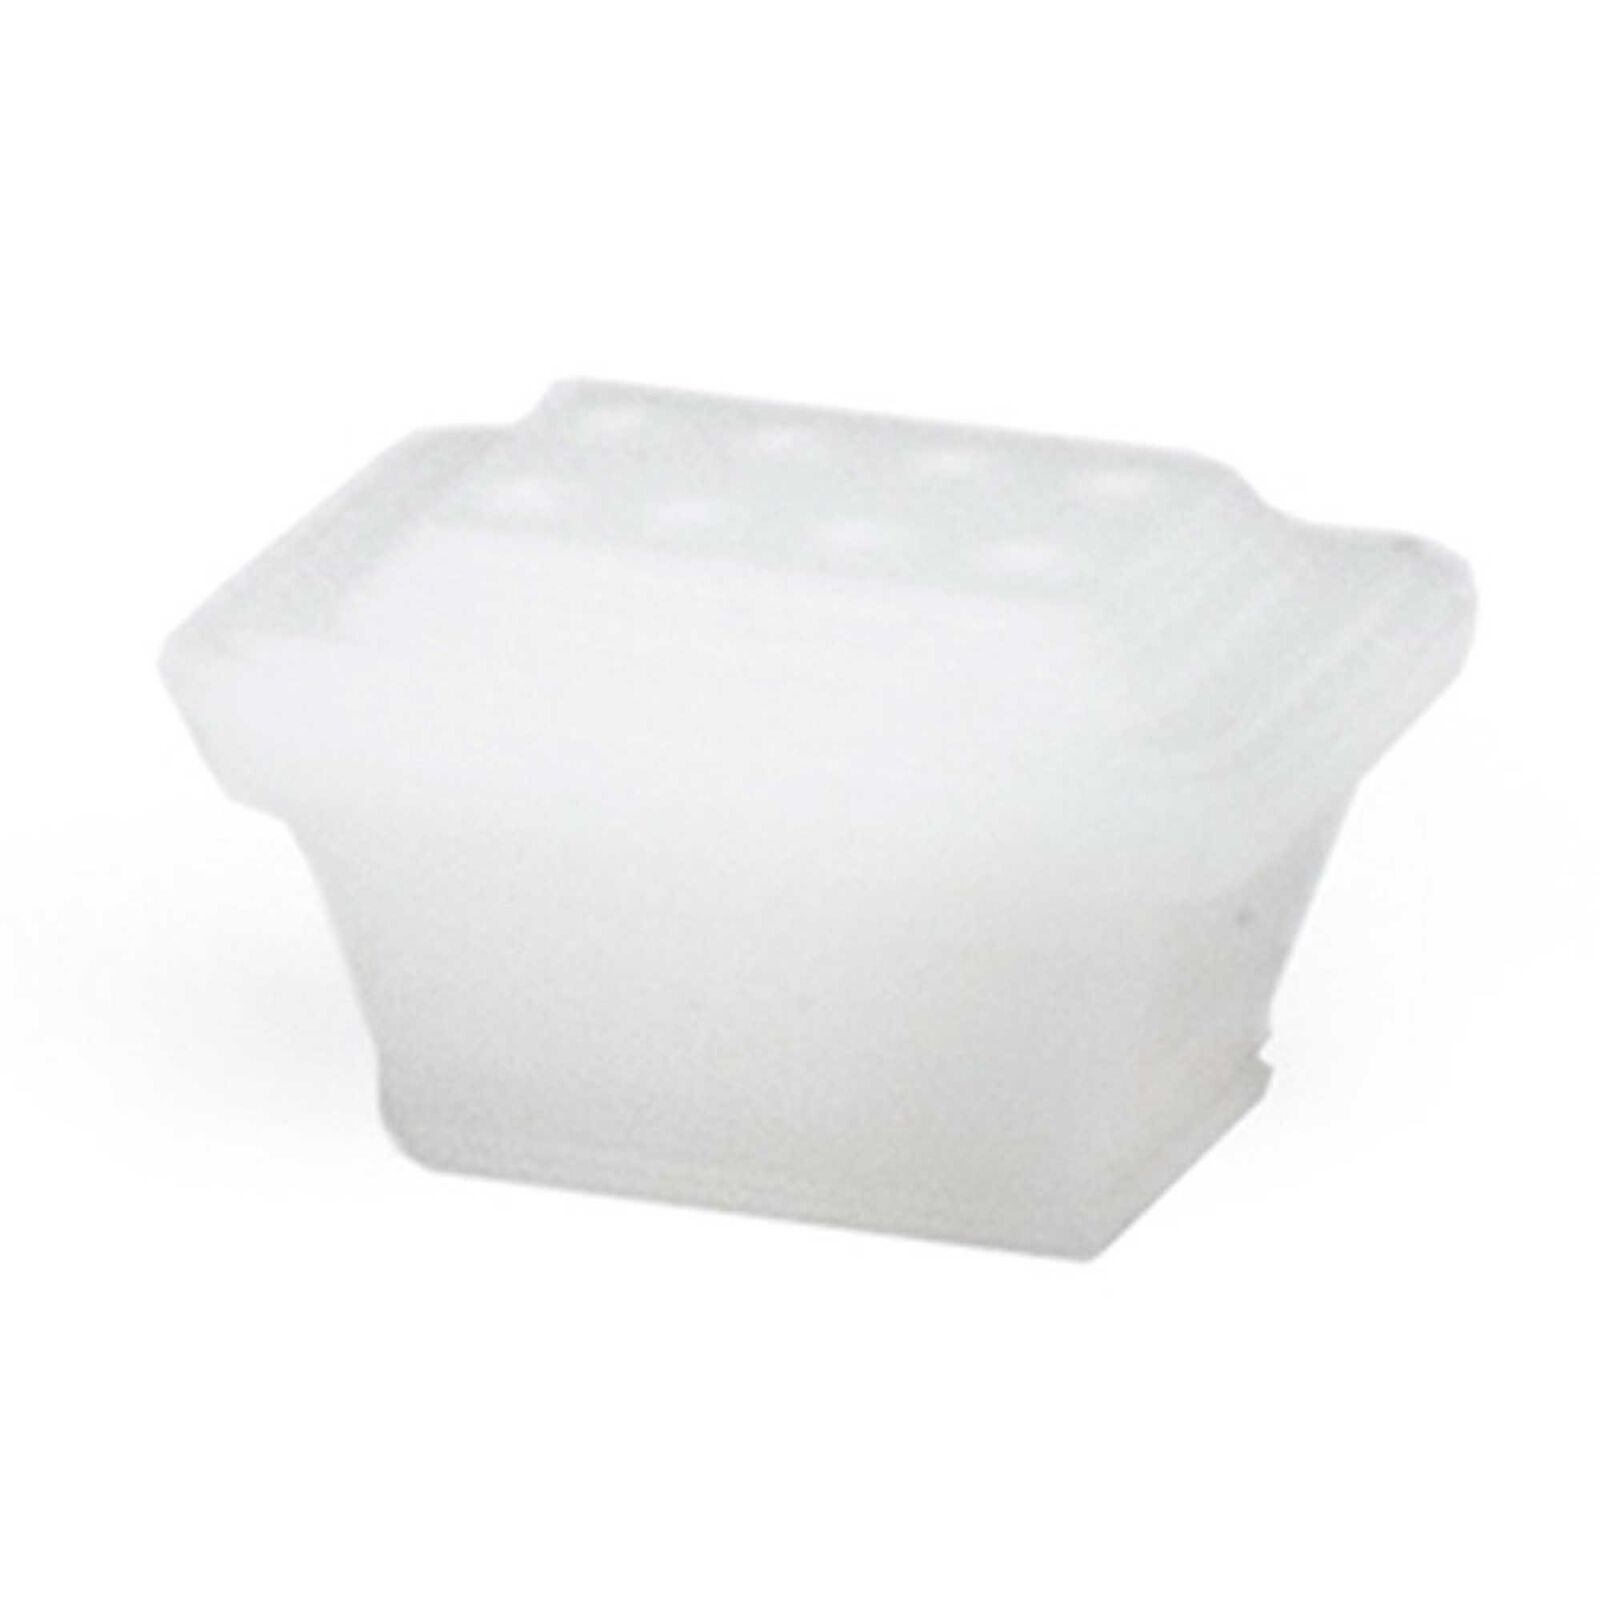 N Styrofoam Cooler (6)